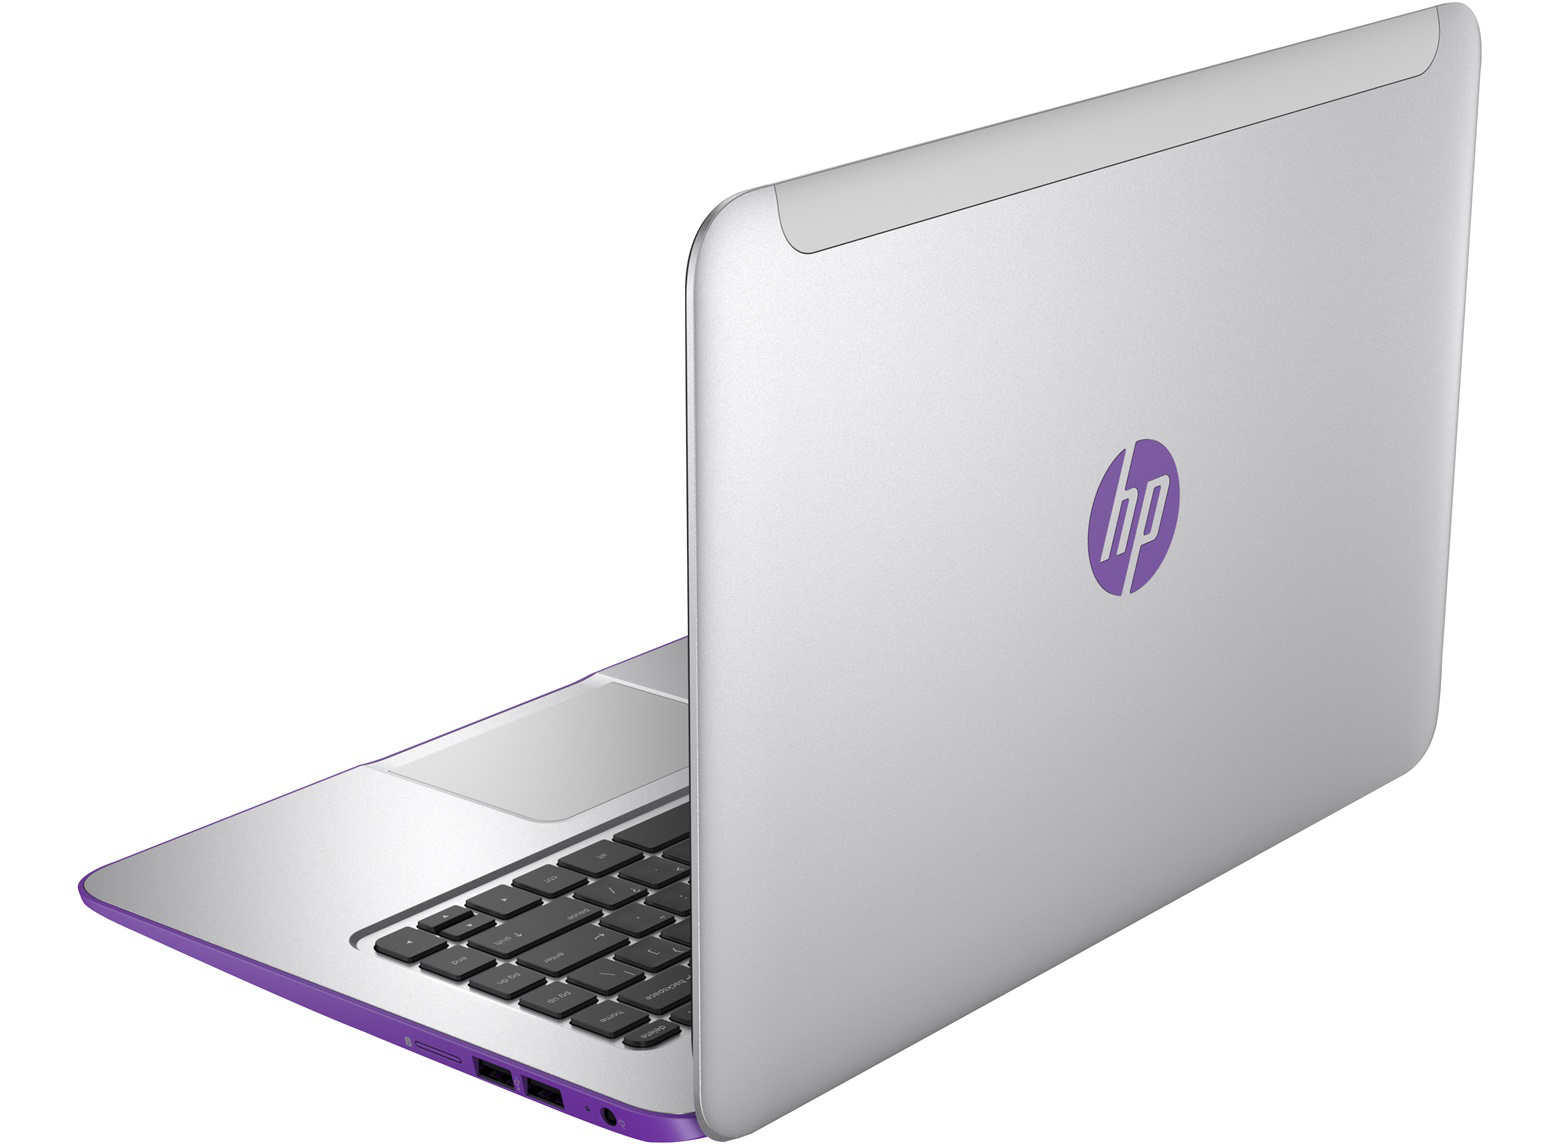 HP Stream 14 in Purple Color Variants